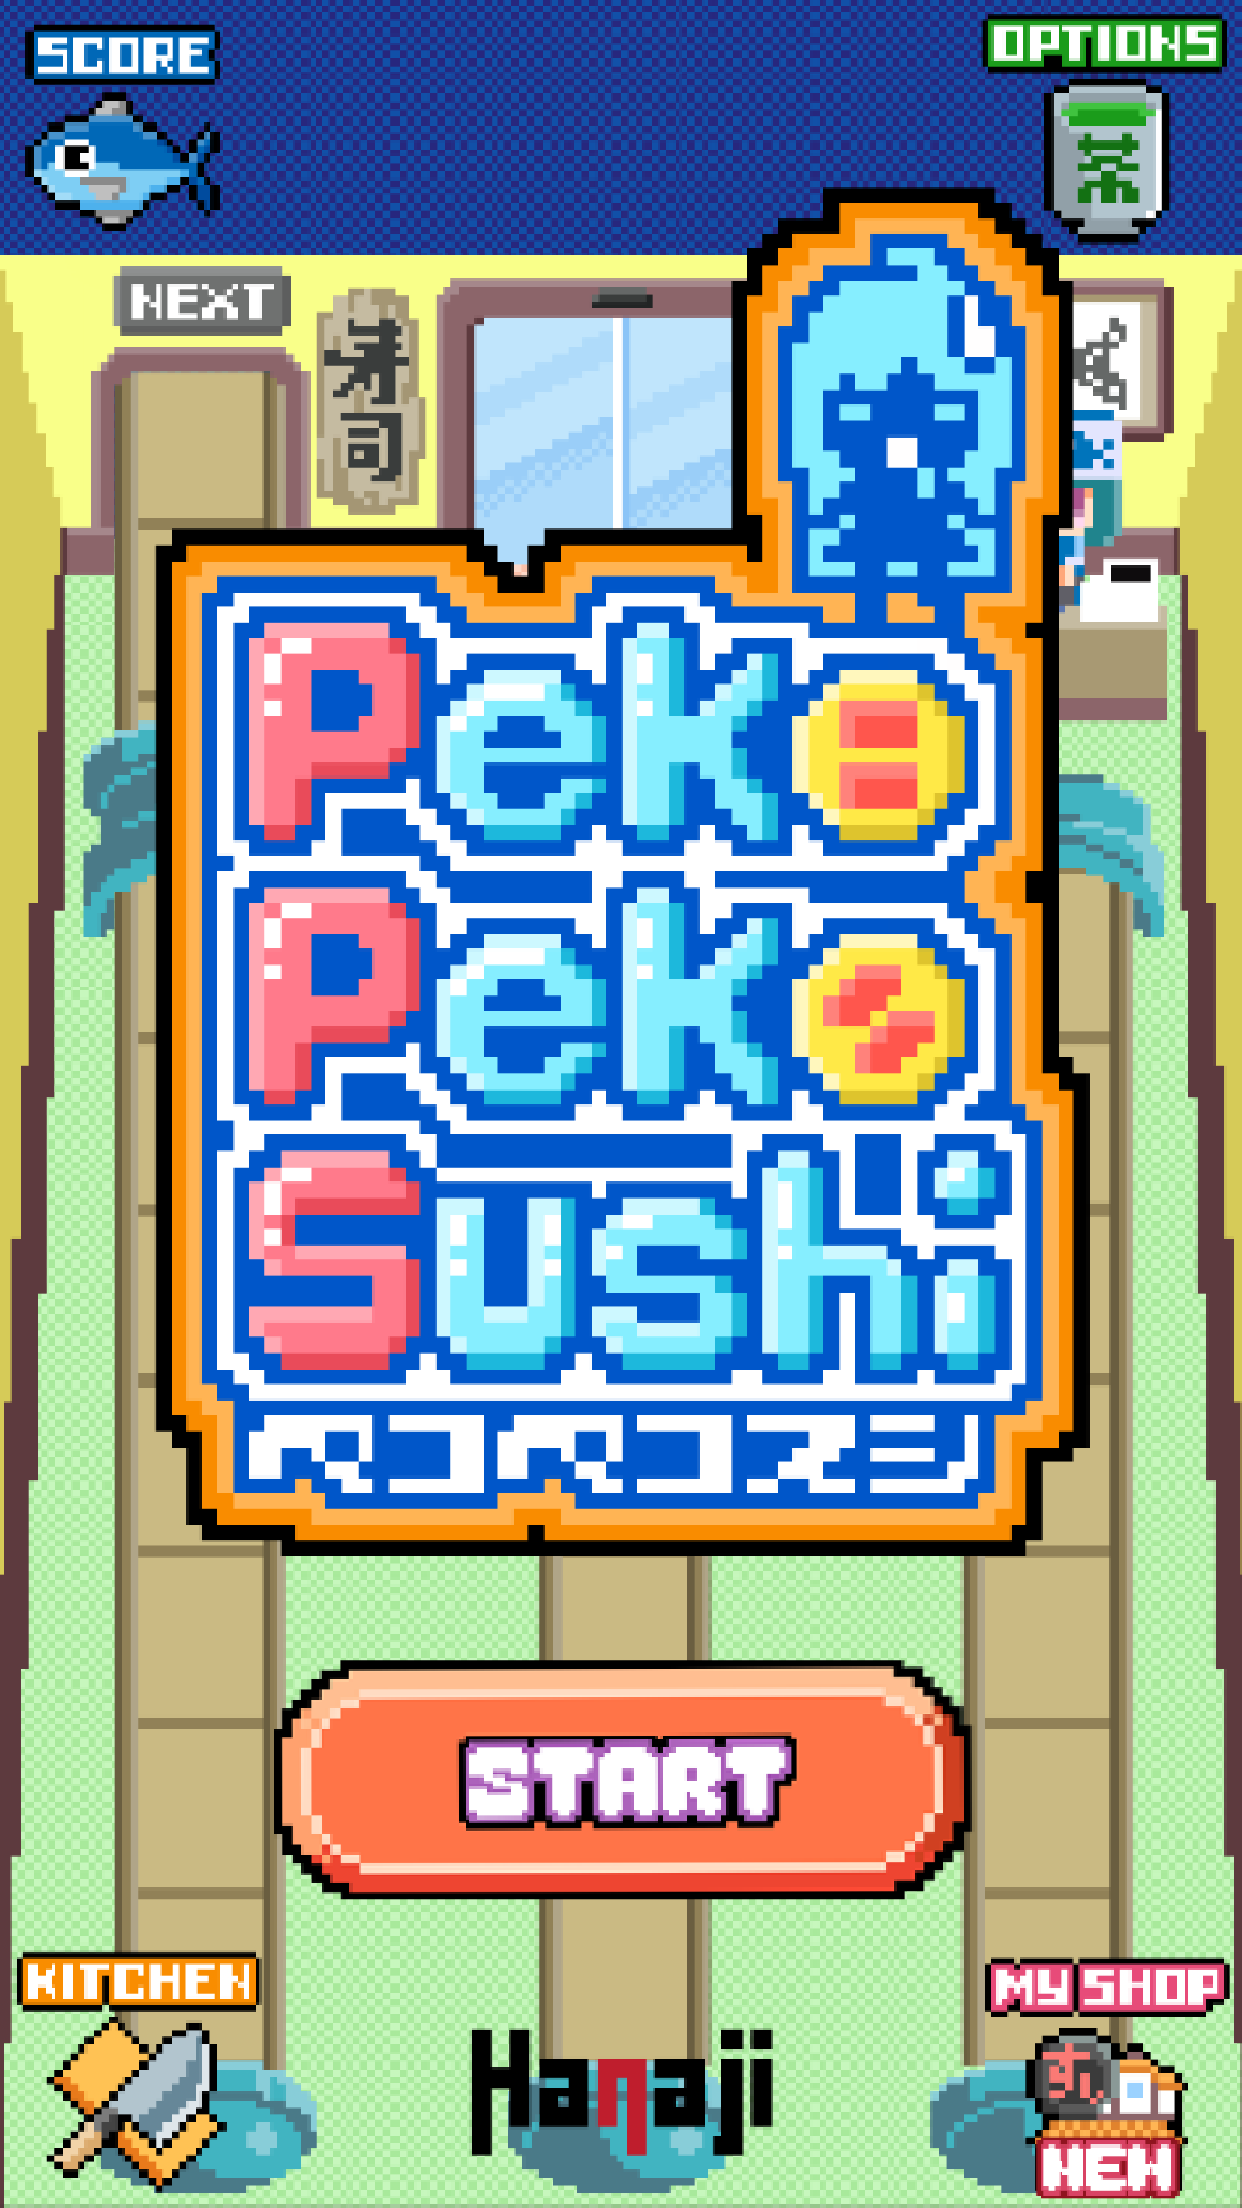 Screenshot 1 of Sushi pekopeko 1.0.4